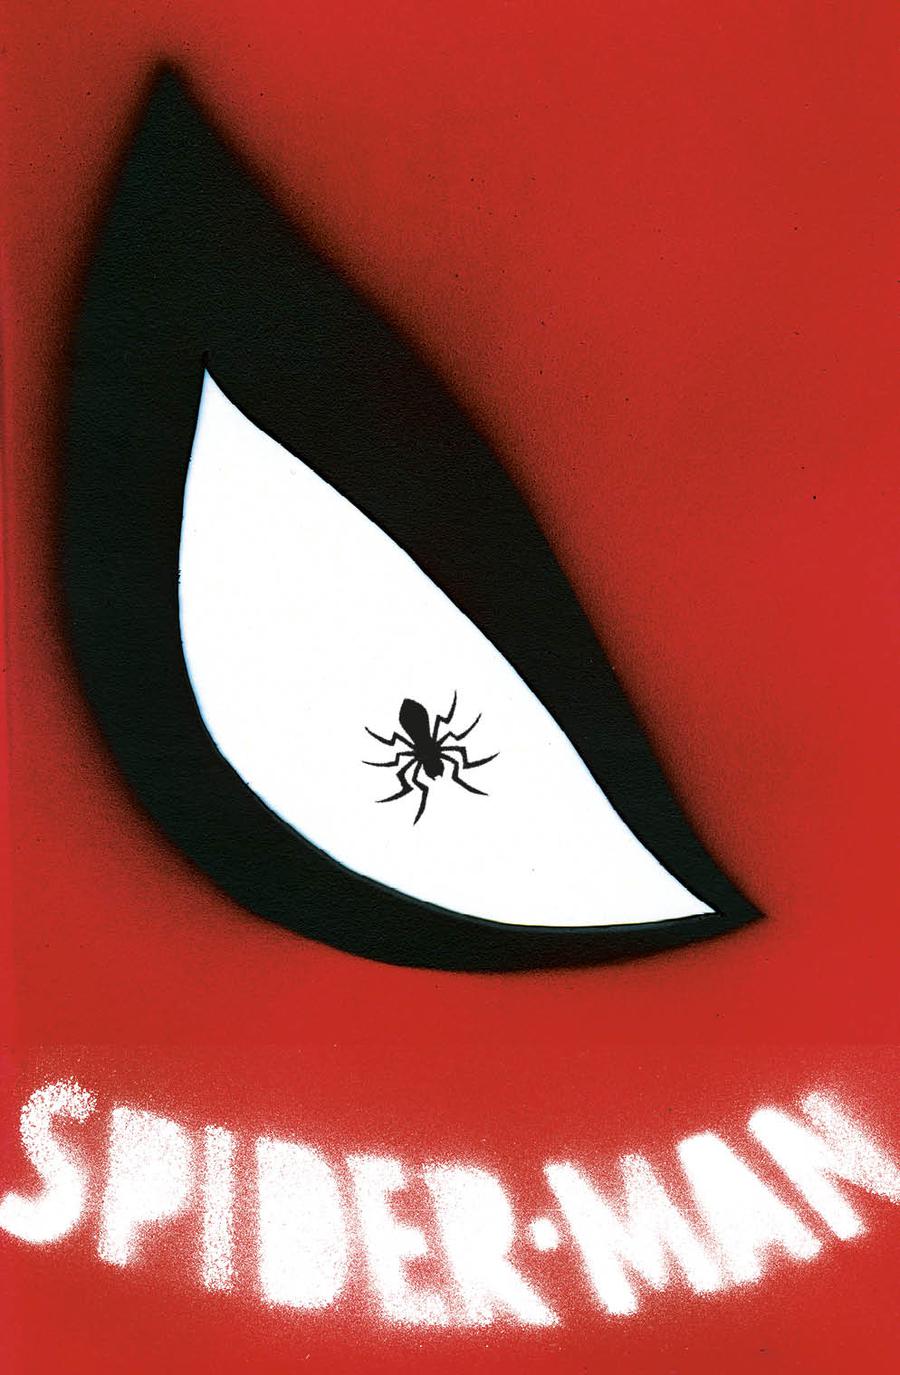 Spider-Man Vol 3 #1 Cover B Variant Chip Kidd Die-Cut Cover